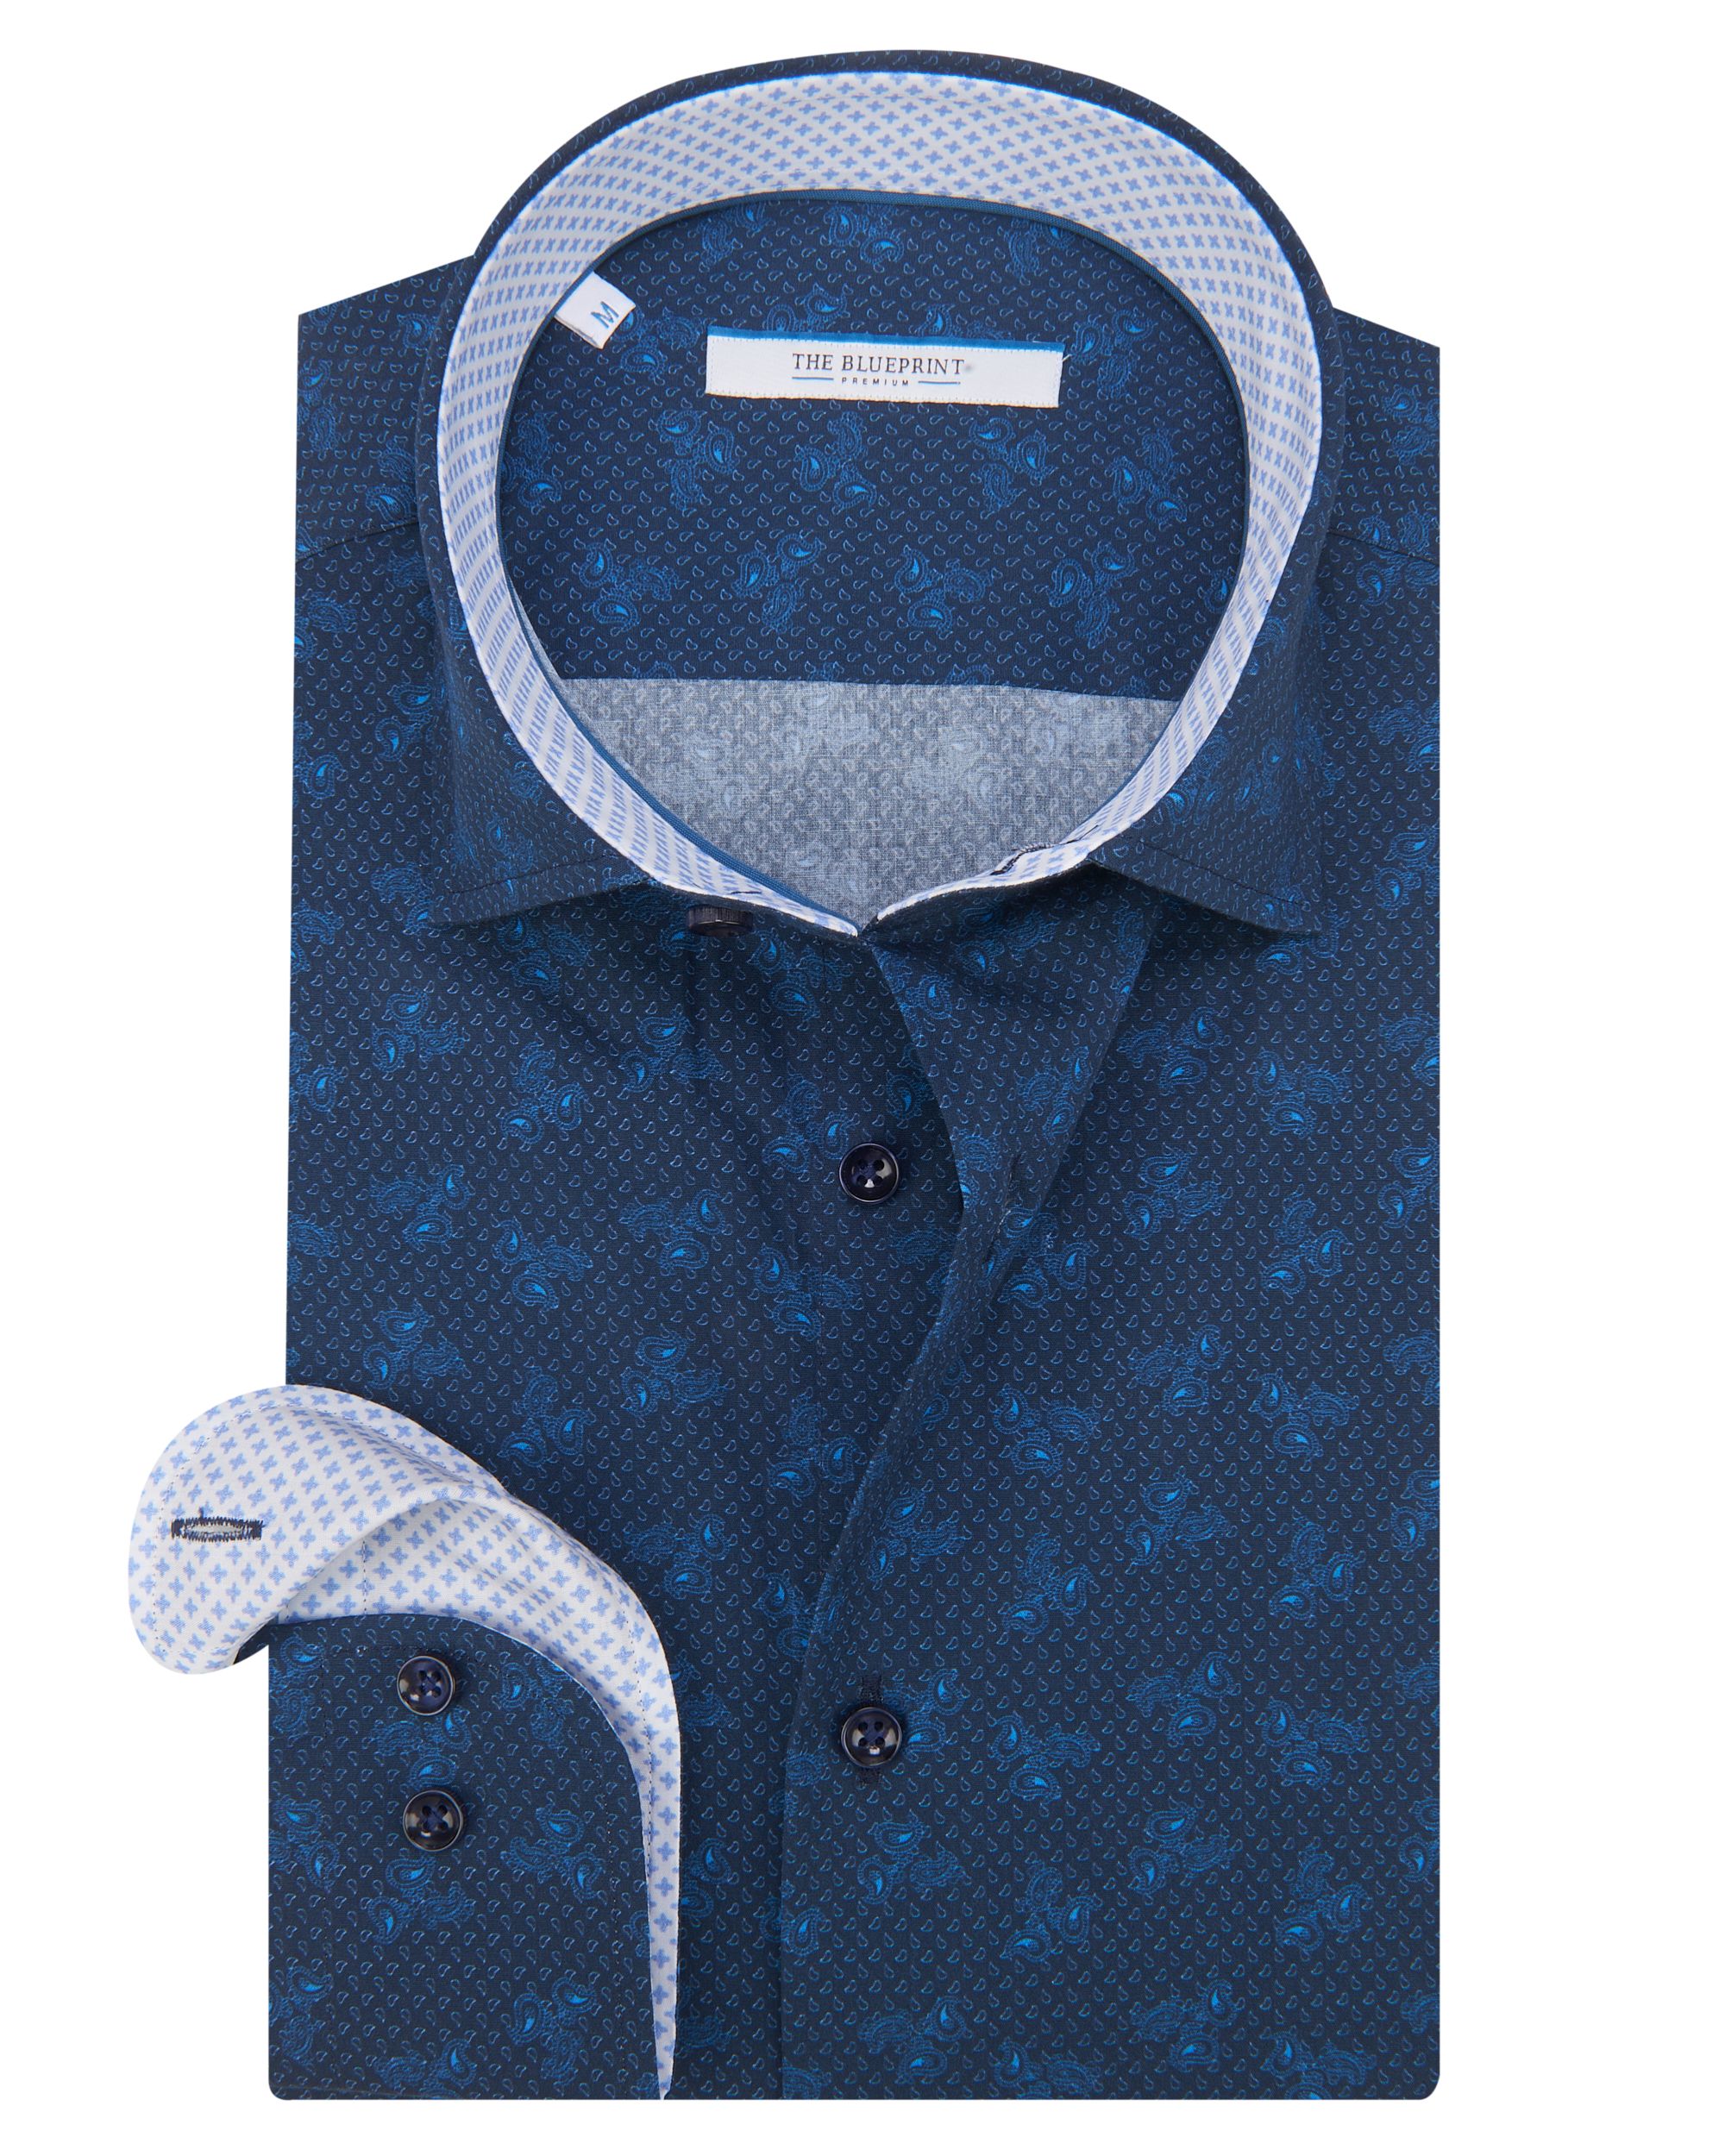 The BLUEPRINT Premium Trendy overhemd LM Donkerblauw dessin 078636-001-L